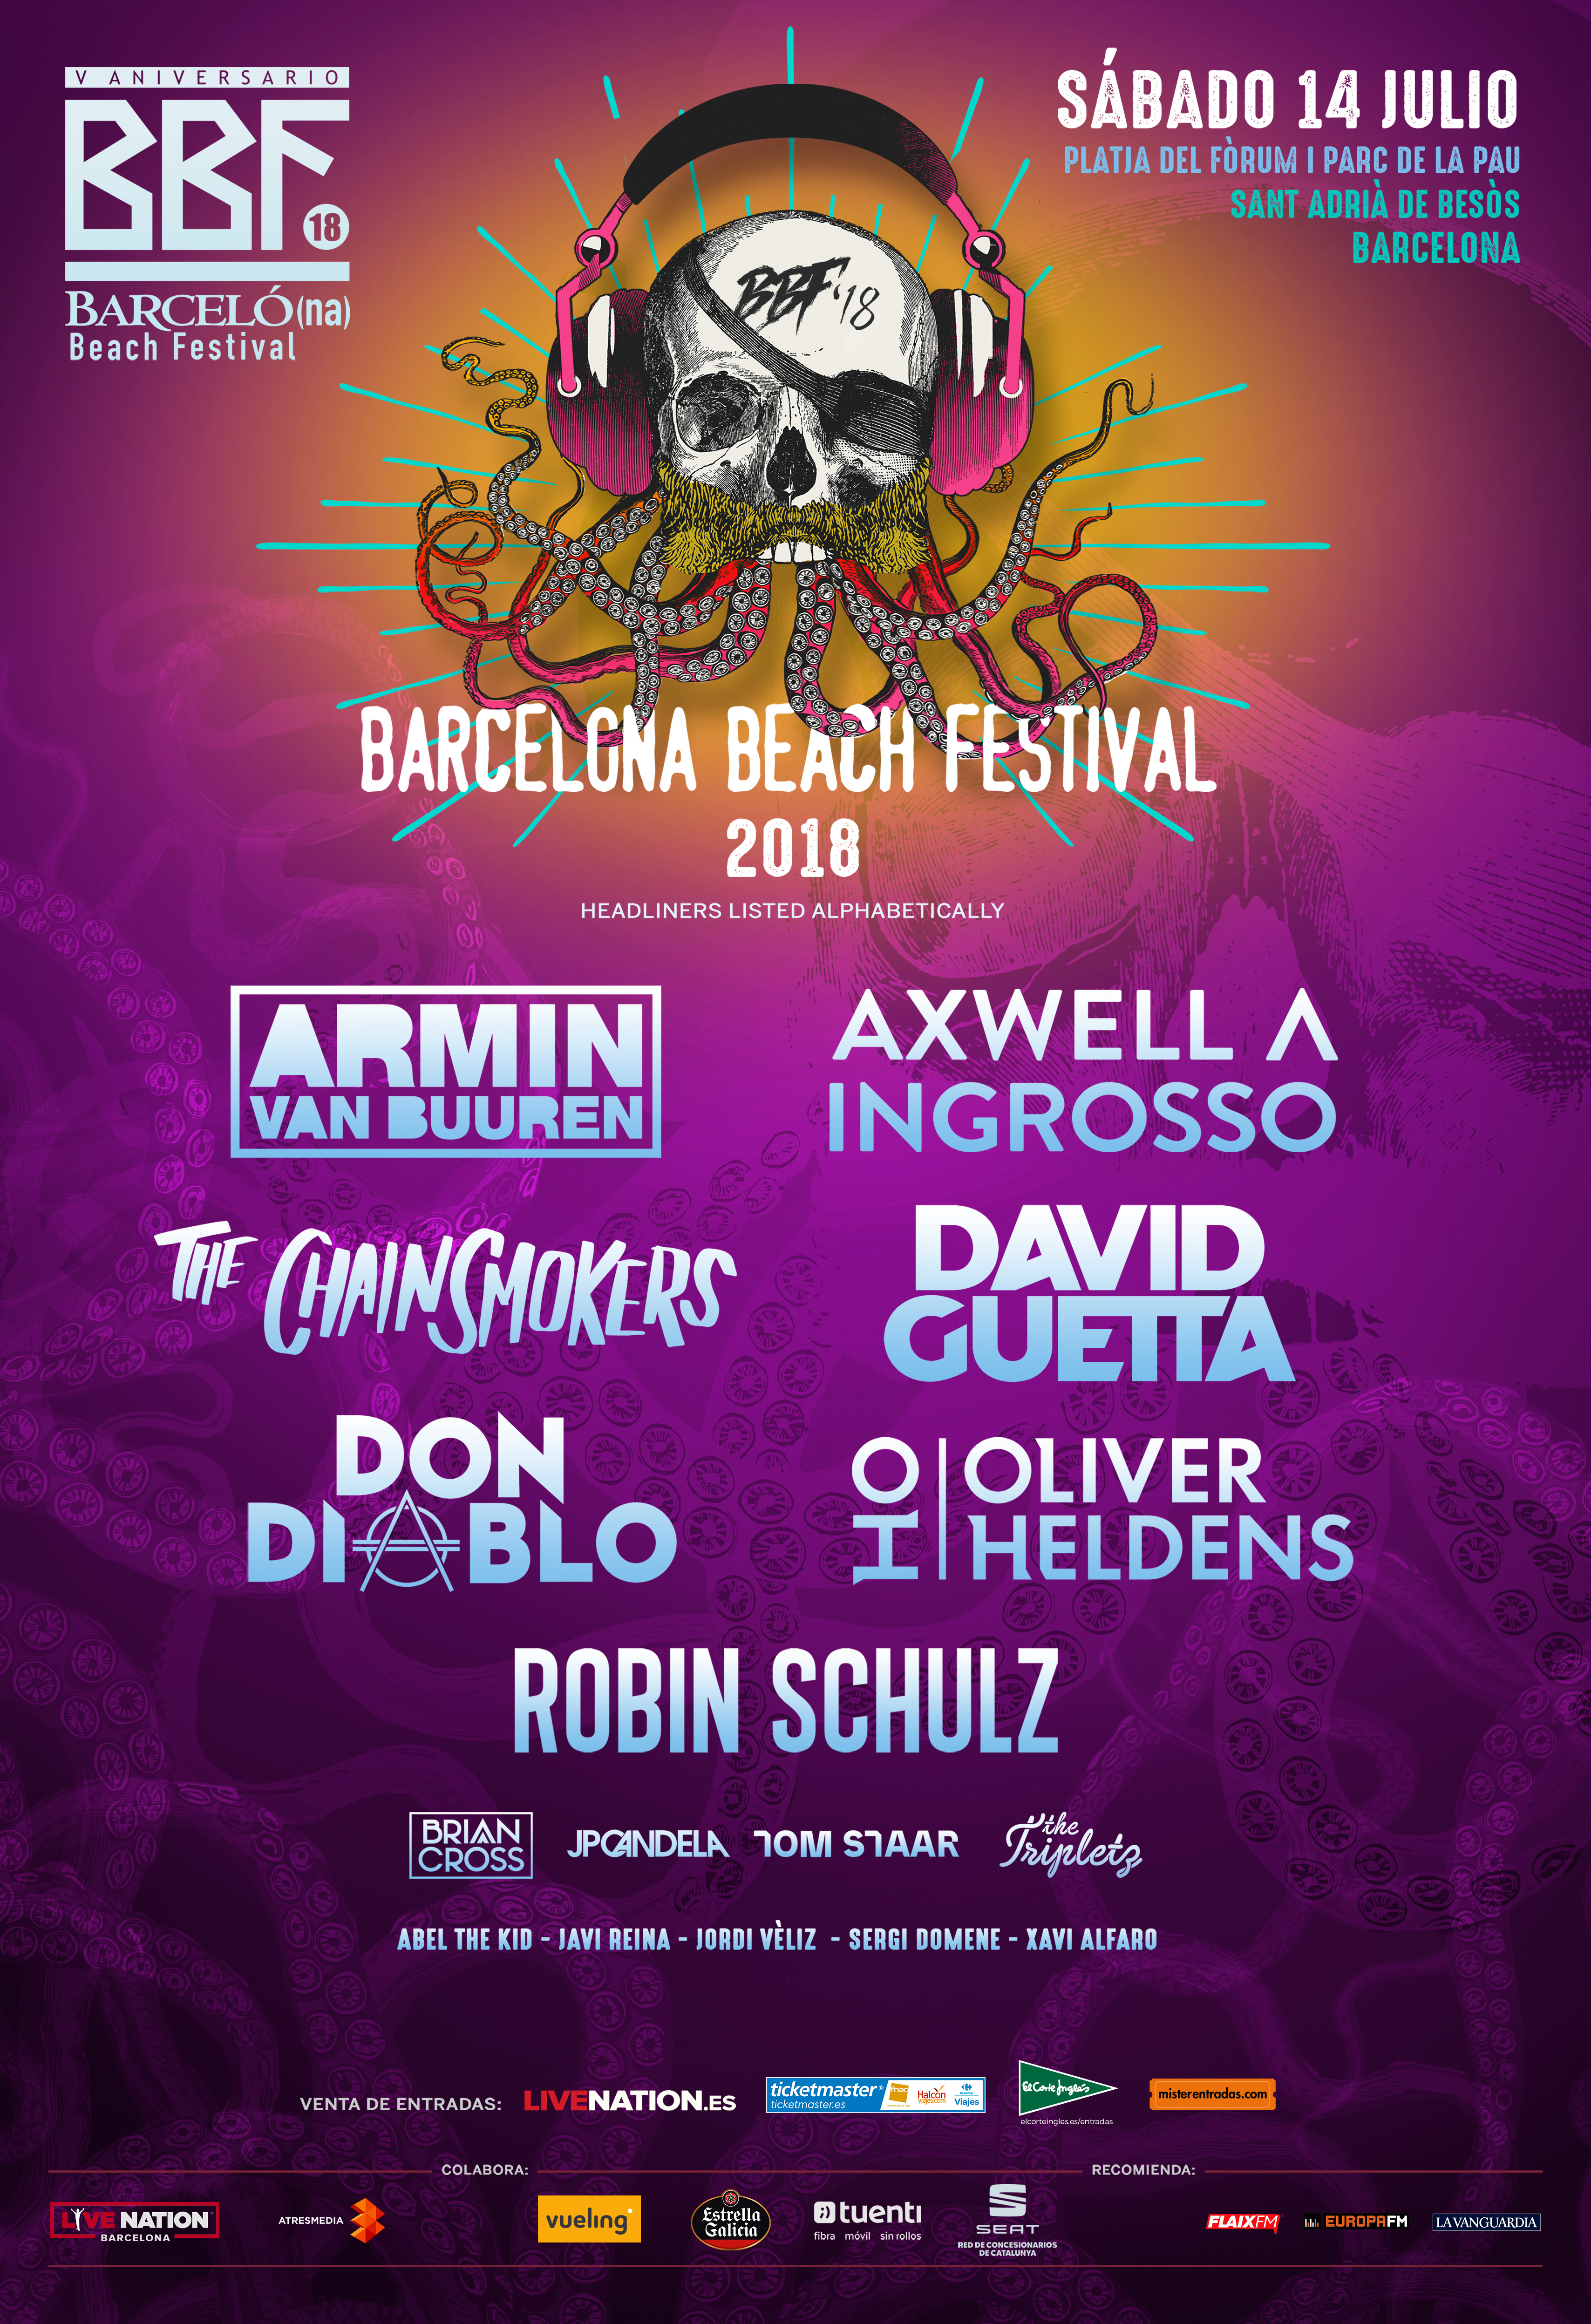 Barcelona Beach Festival 2018 Events And Guide Barcelona